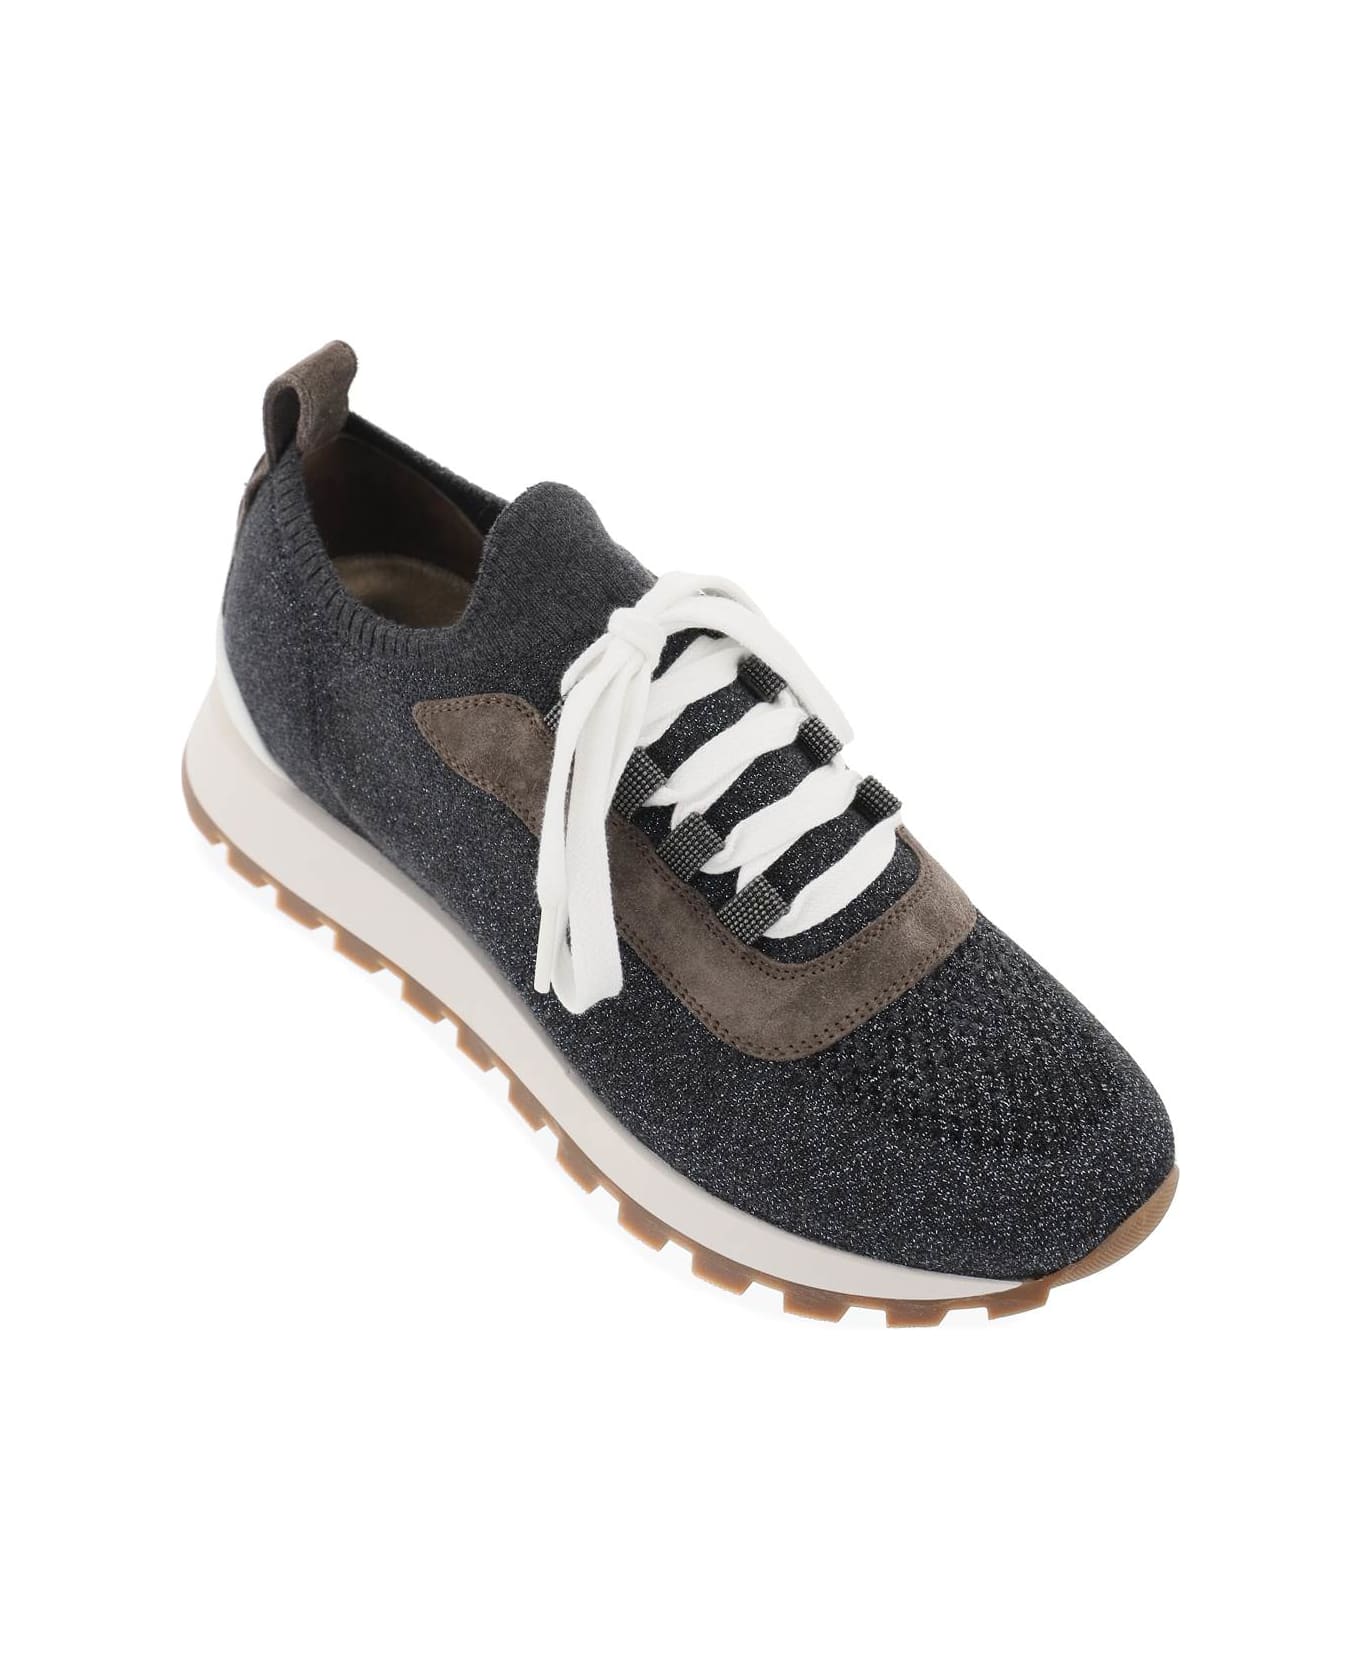 Brunello Cucinelli Sparkling Knit Sneakers - LIGNITE (Grey)